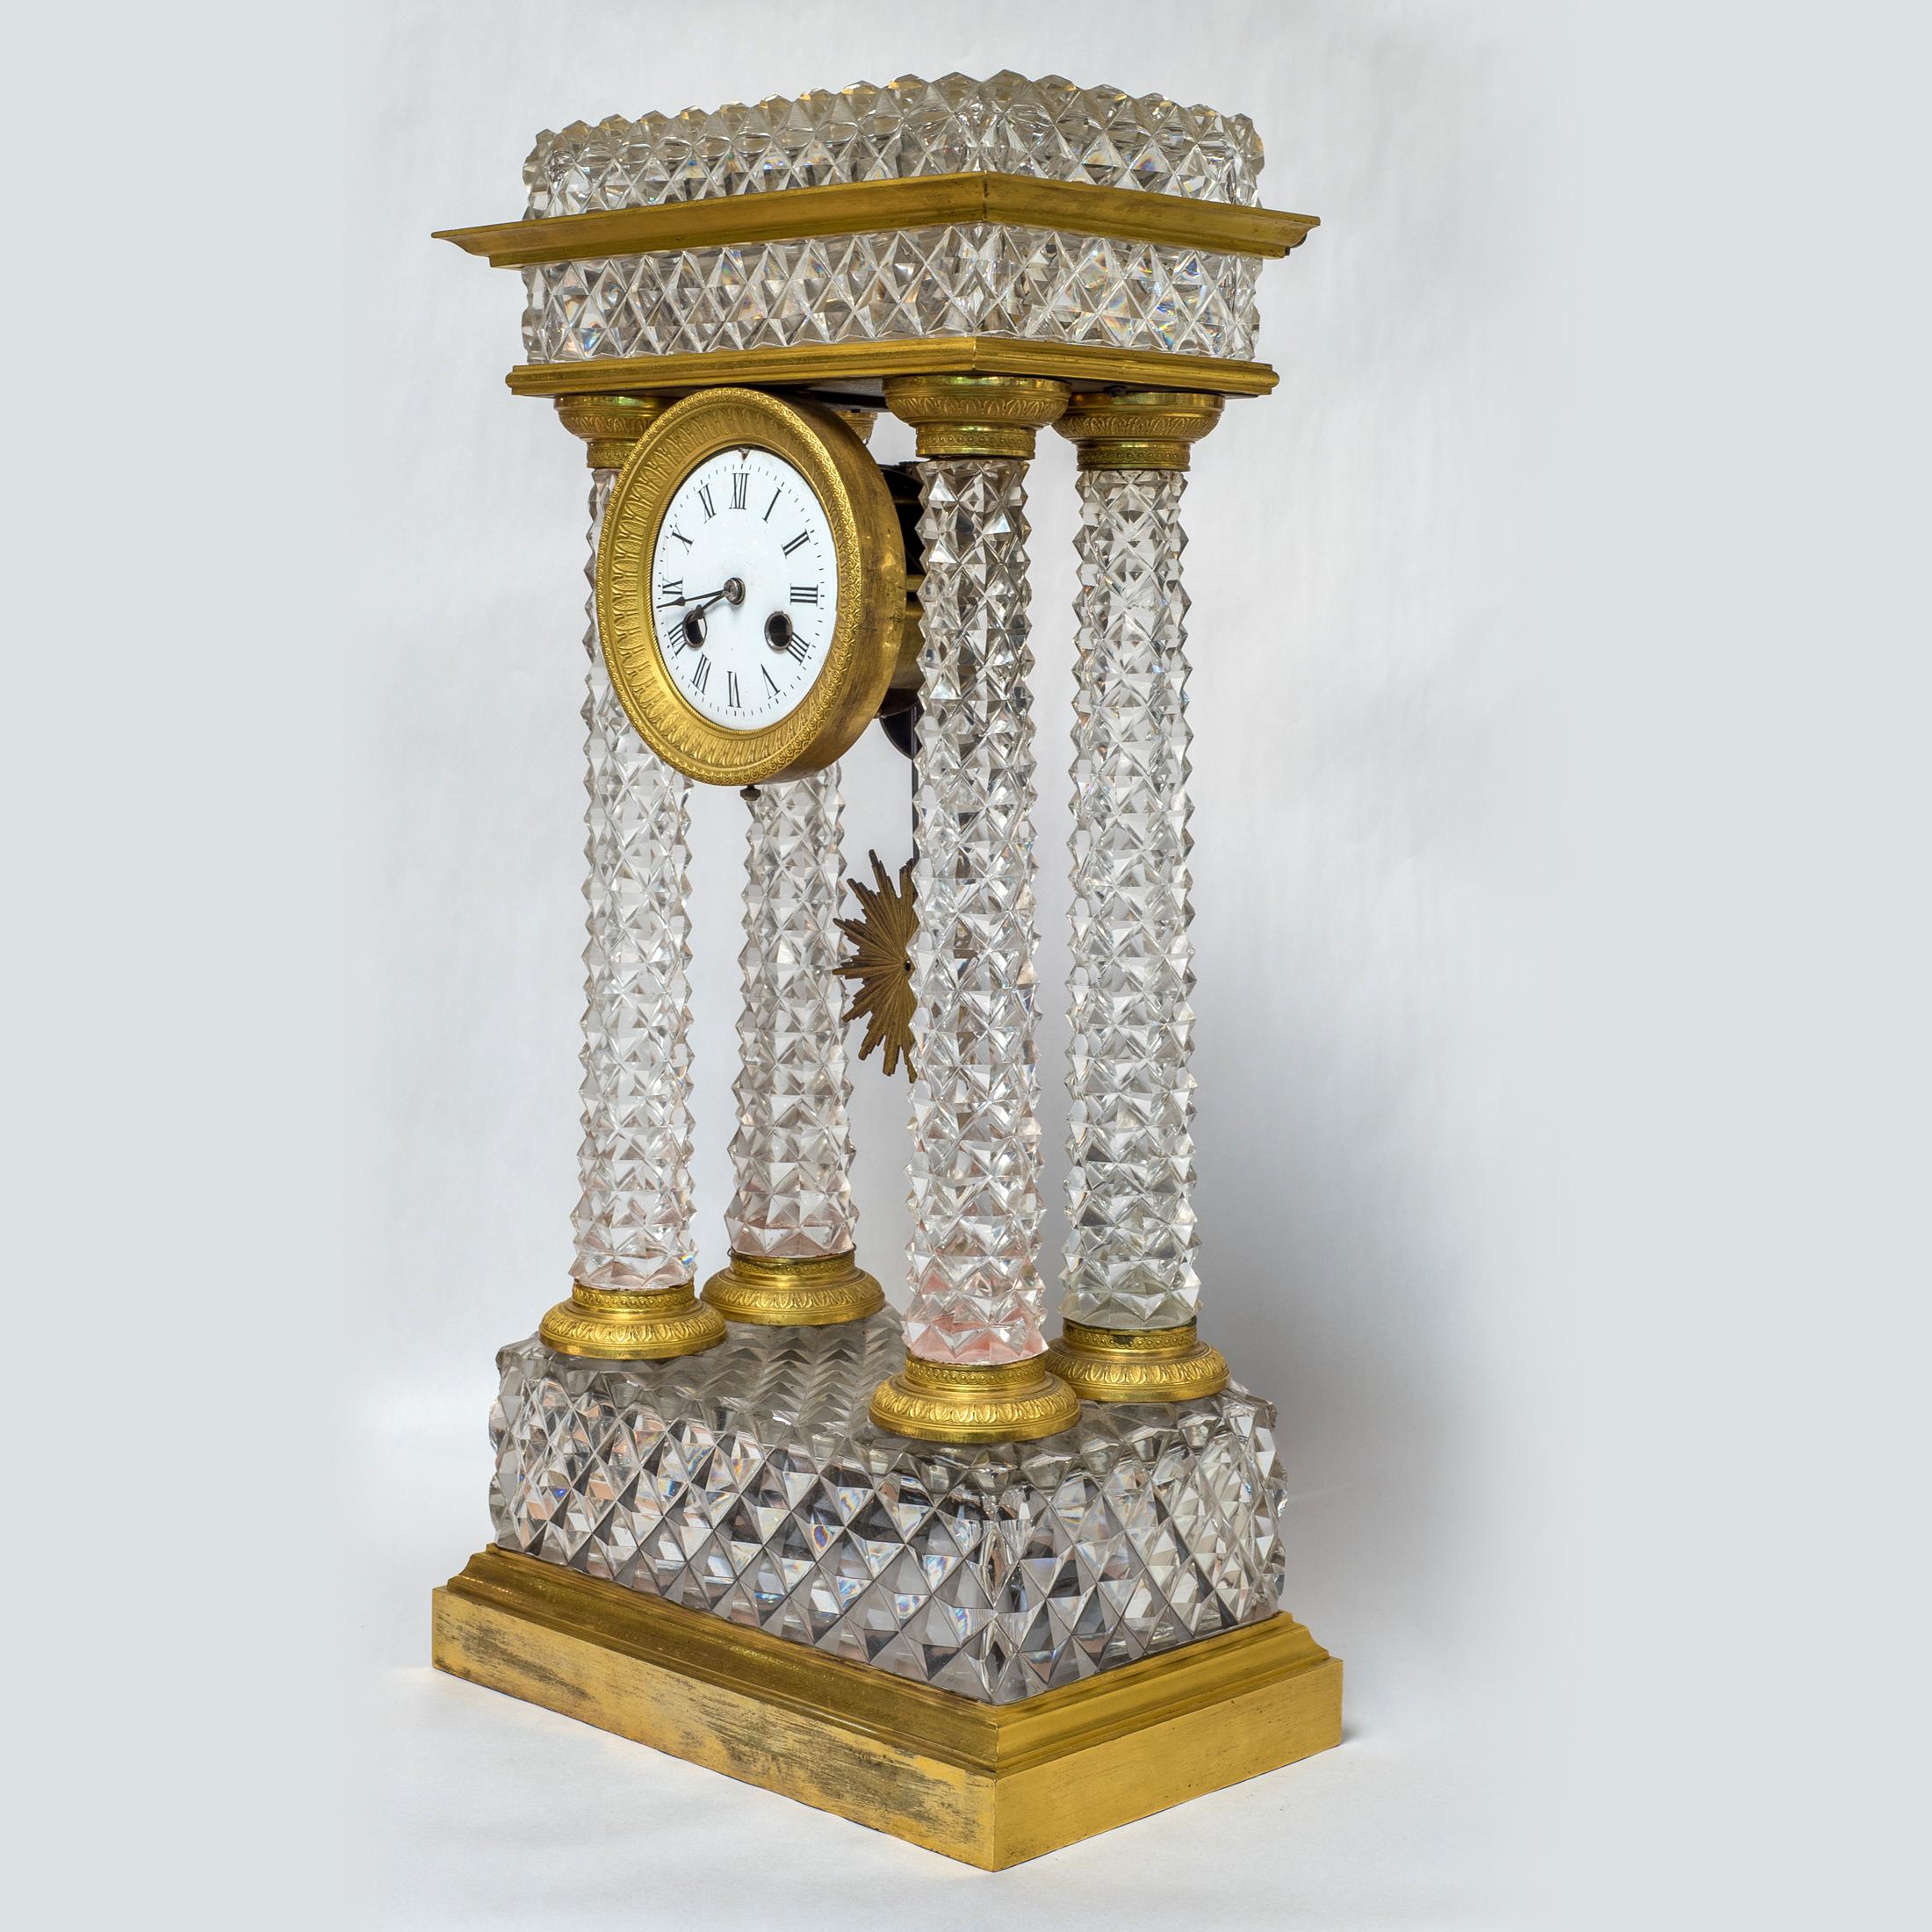 A fine Charles X Ormolu and cut-glass portico mantel clock

Date: circa 1825
Origin: French
Dimension: 19 x 9 3/4 x 6 inches.